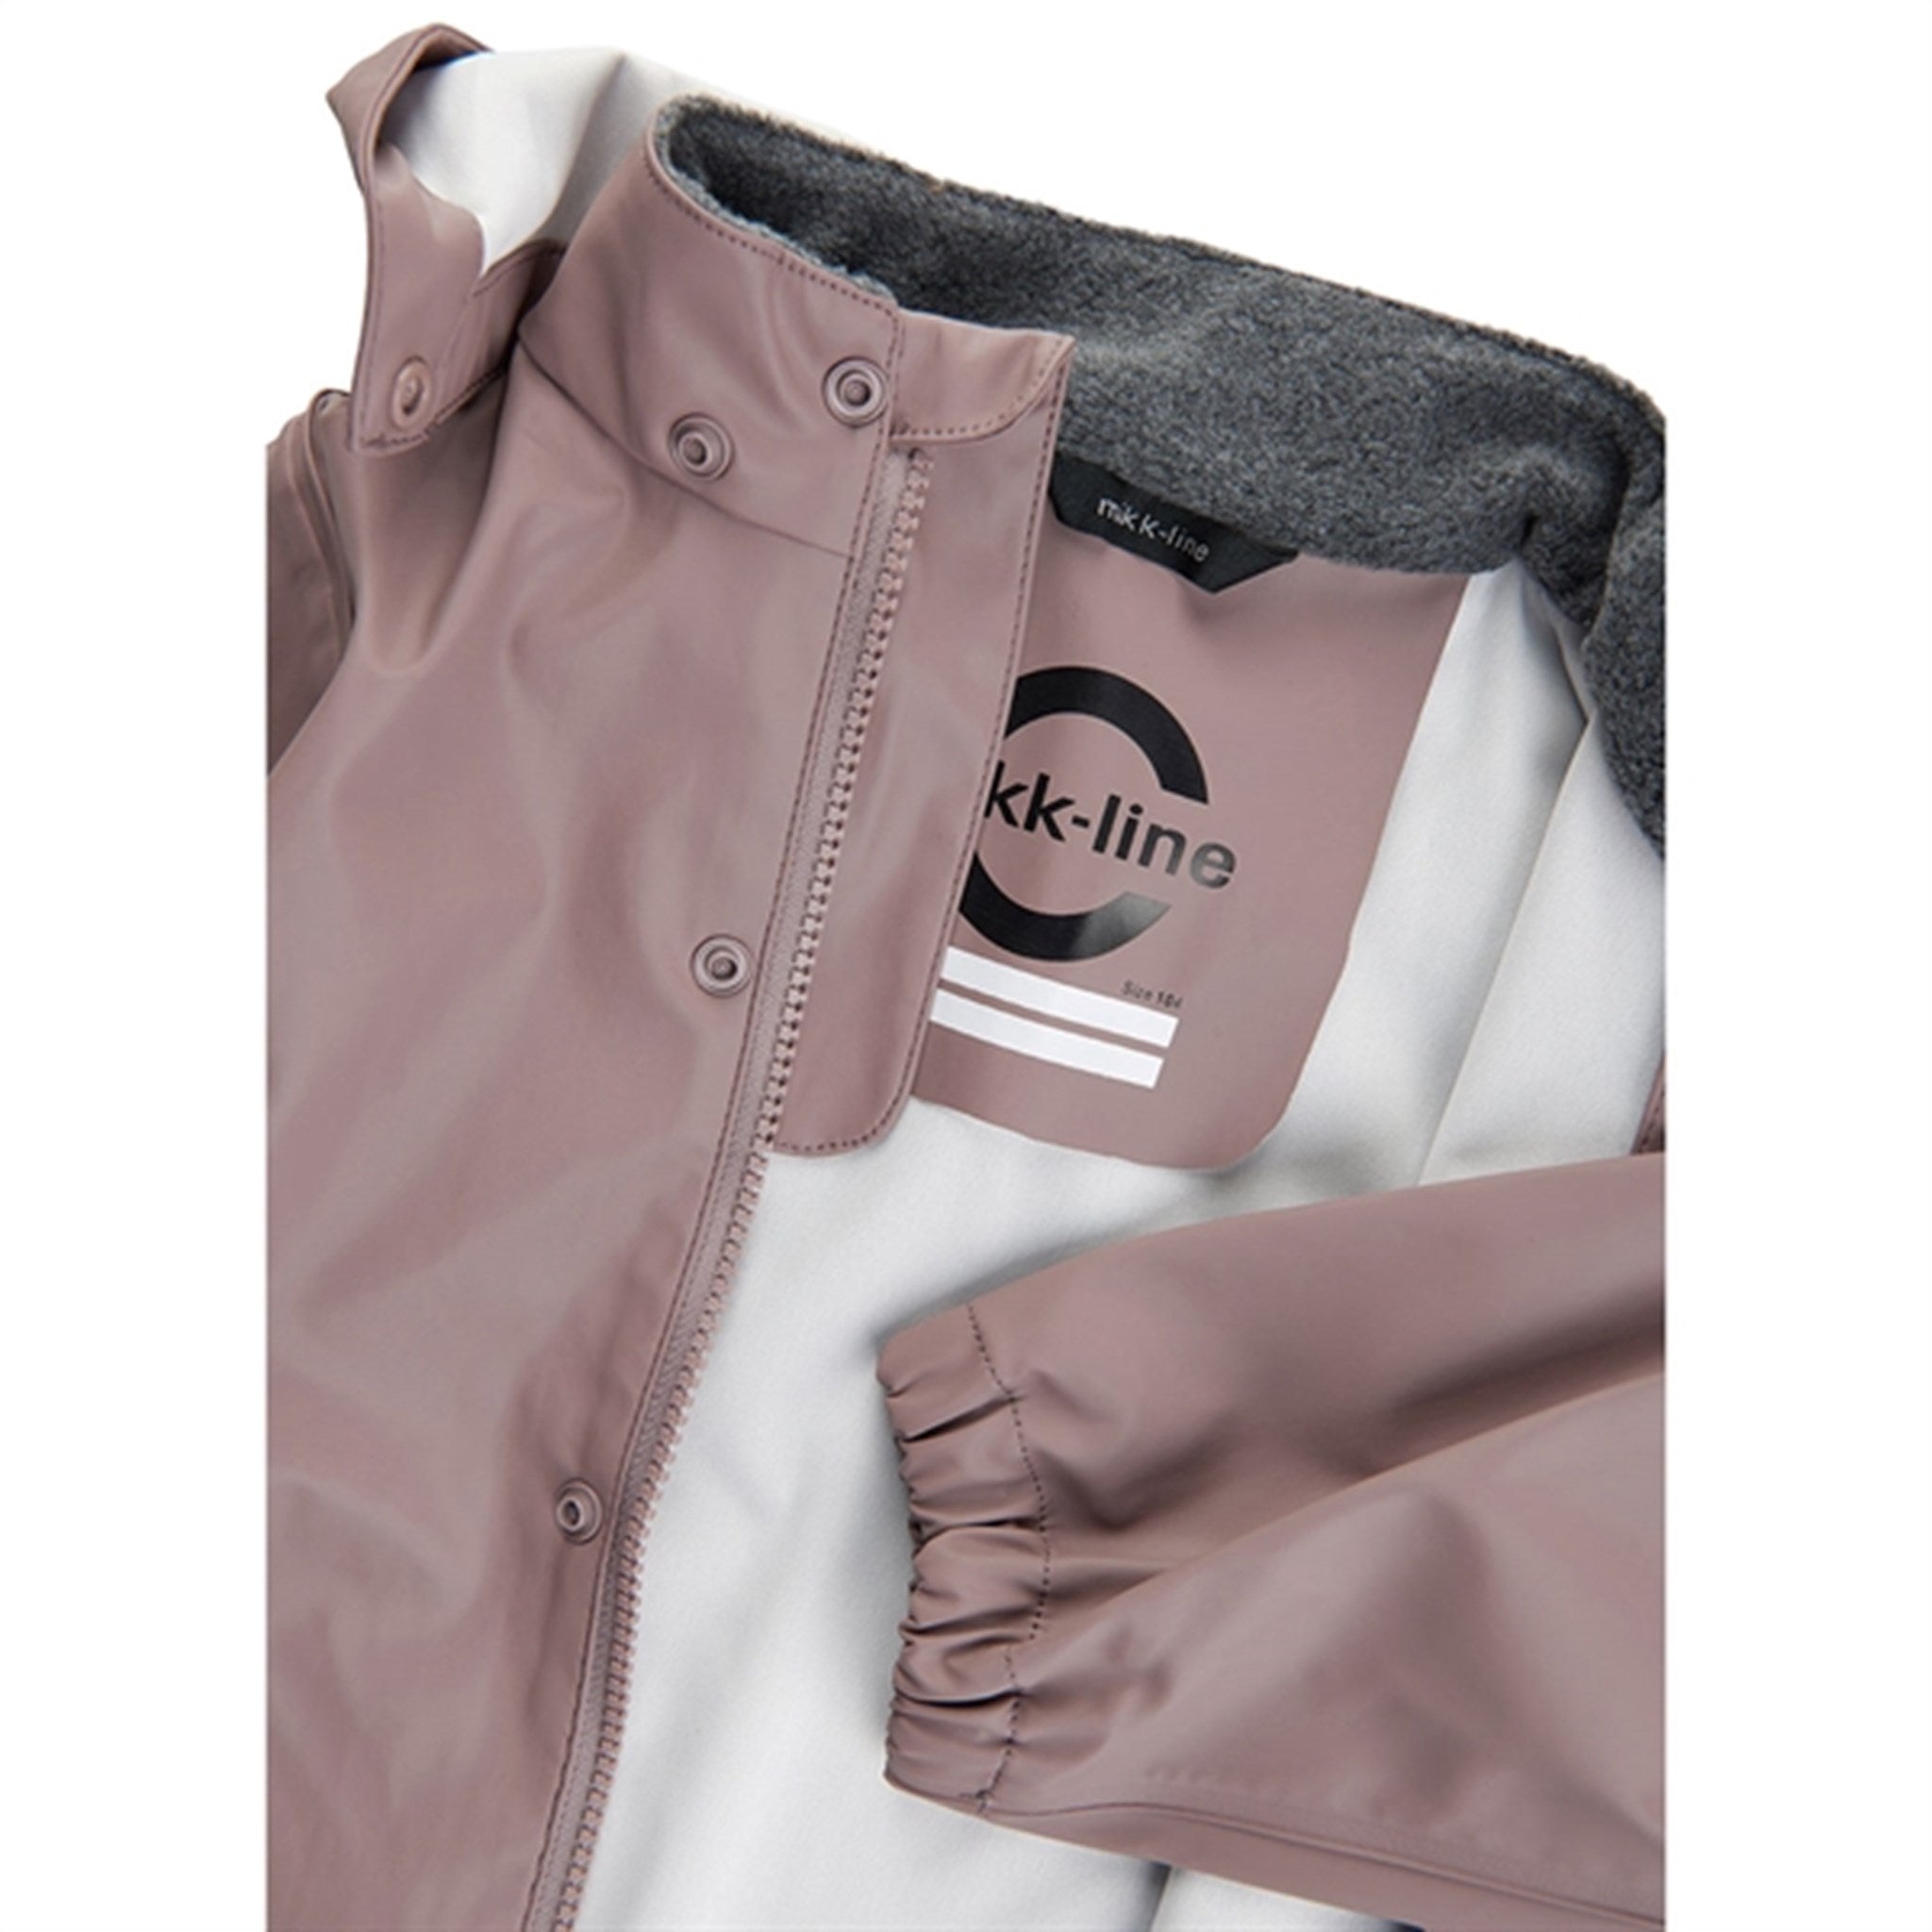 Mikk-Line Rainwear Jacket And Pants Adobe Rose 4